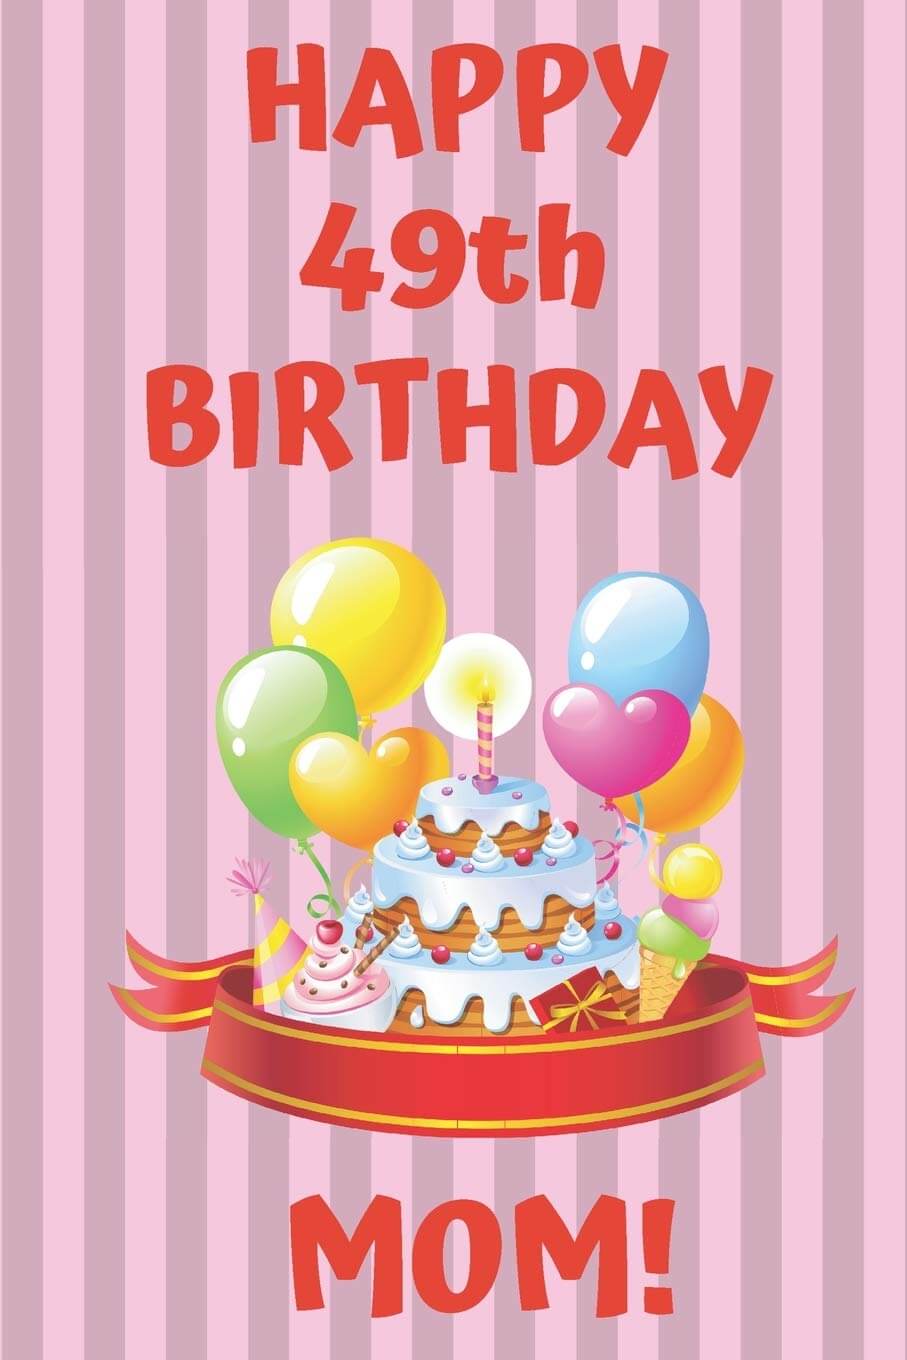 29+ Happy 49th Birthday Mom Wishes